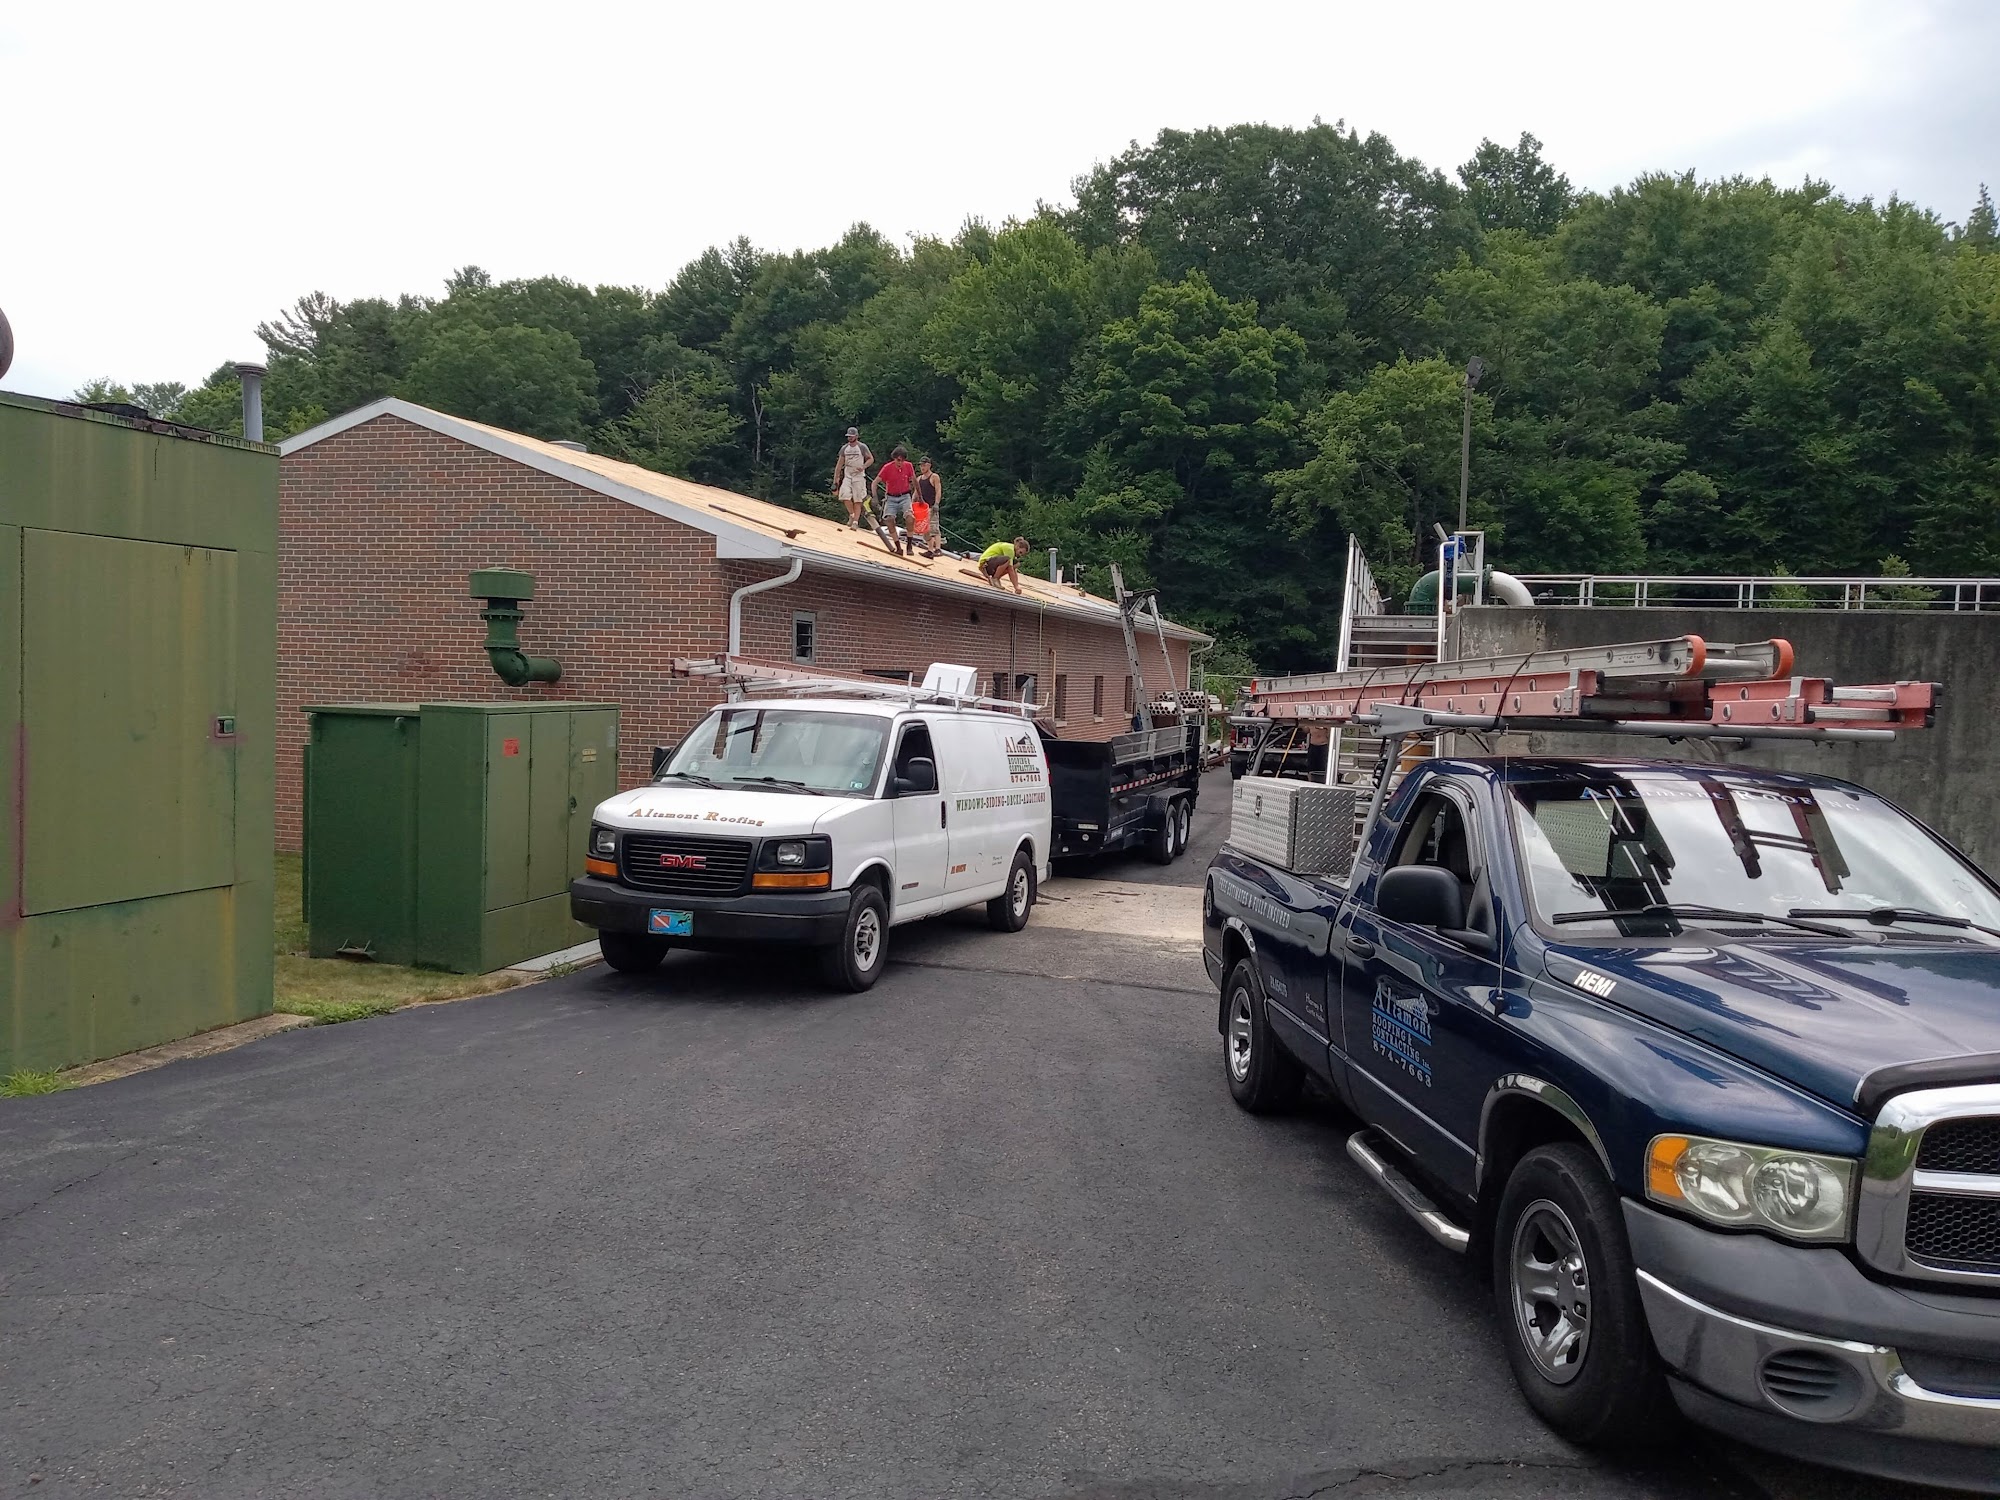 Altamont Roofing & Contracting 431 W Pine St #1116, Frackville Pennsylvania 17931